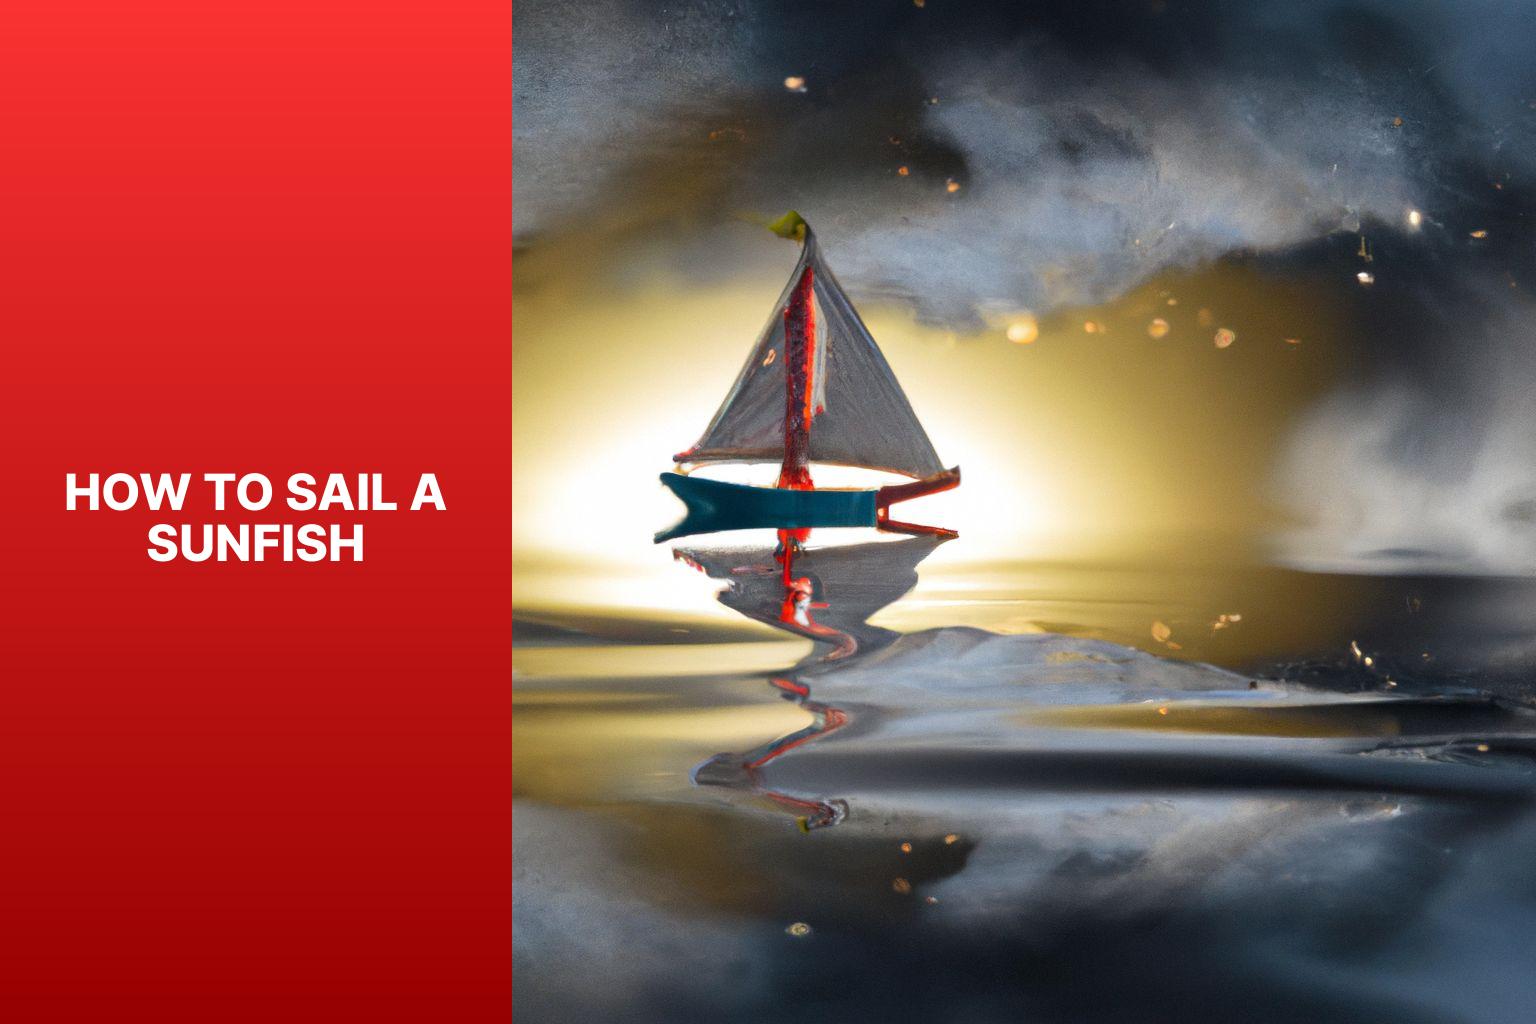 sunfish sailboat model